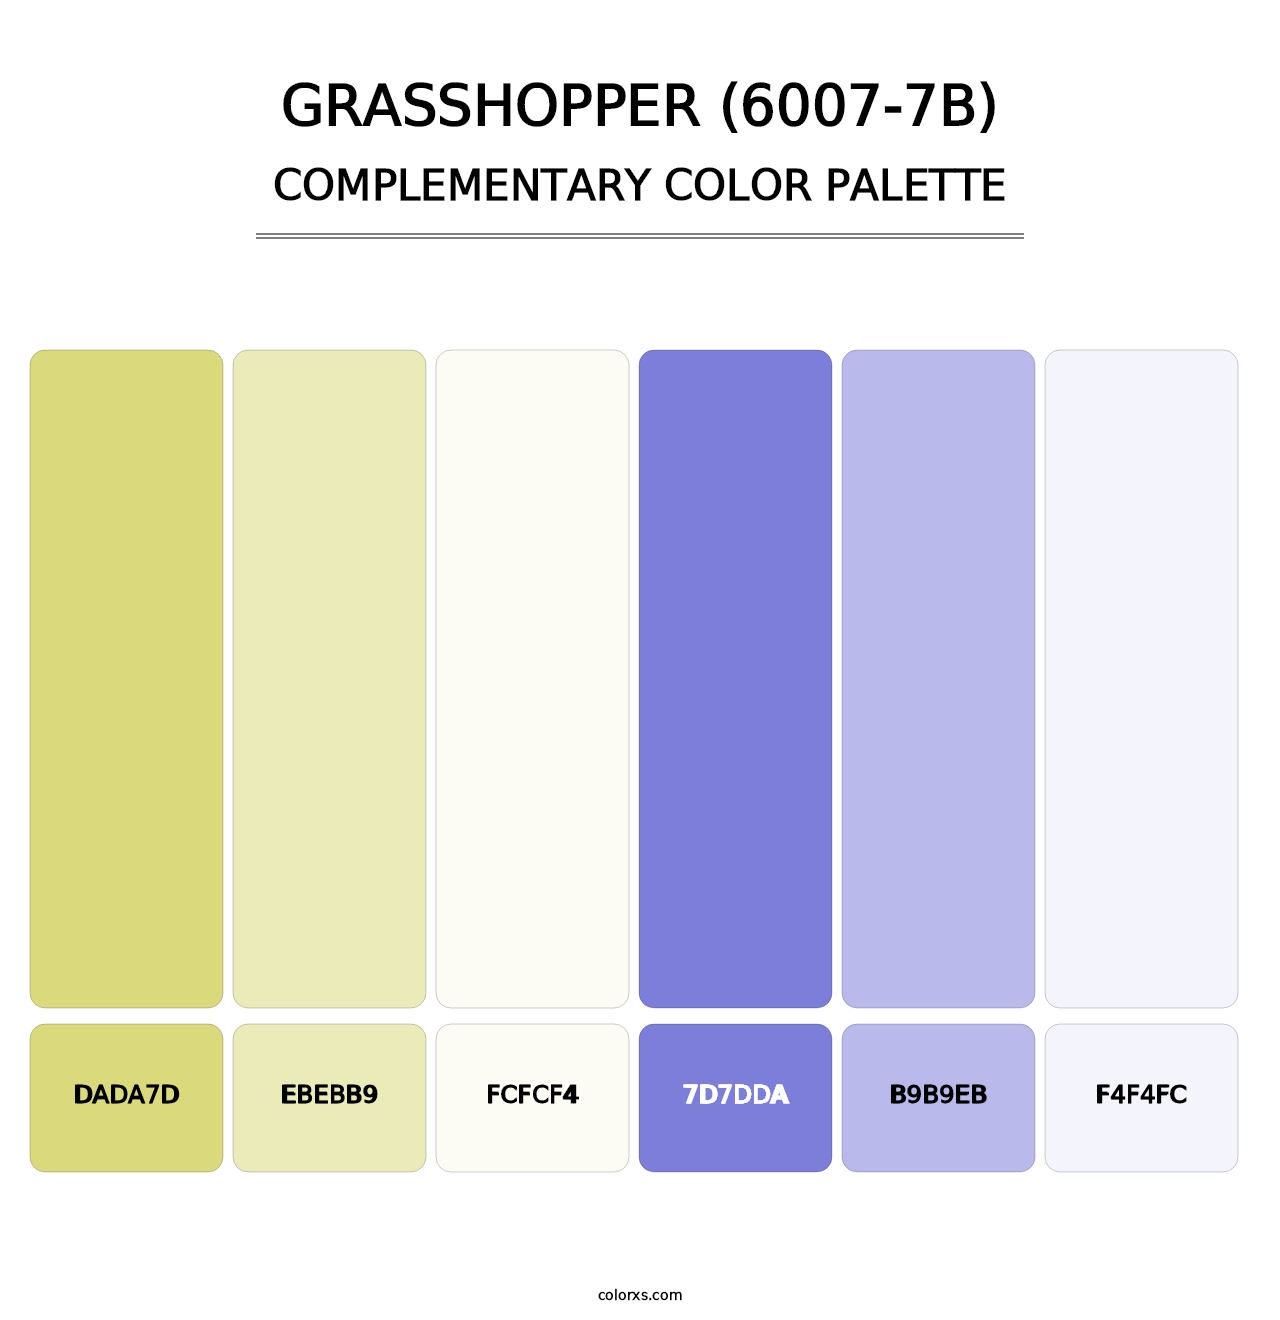 Grasshopper (6007-7B) - Complementary Color Palette